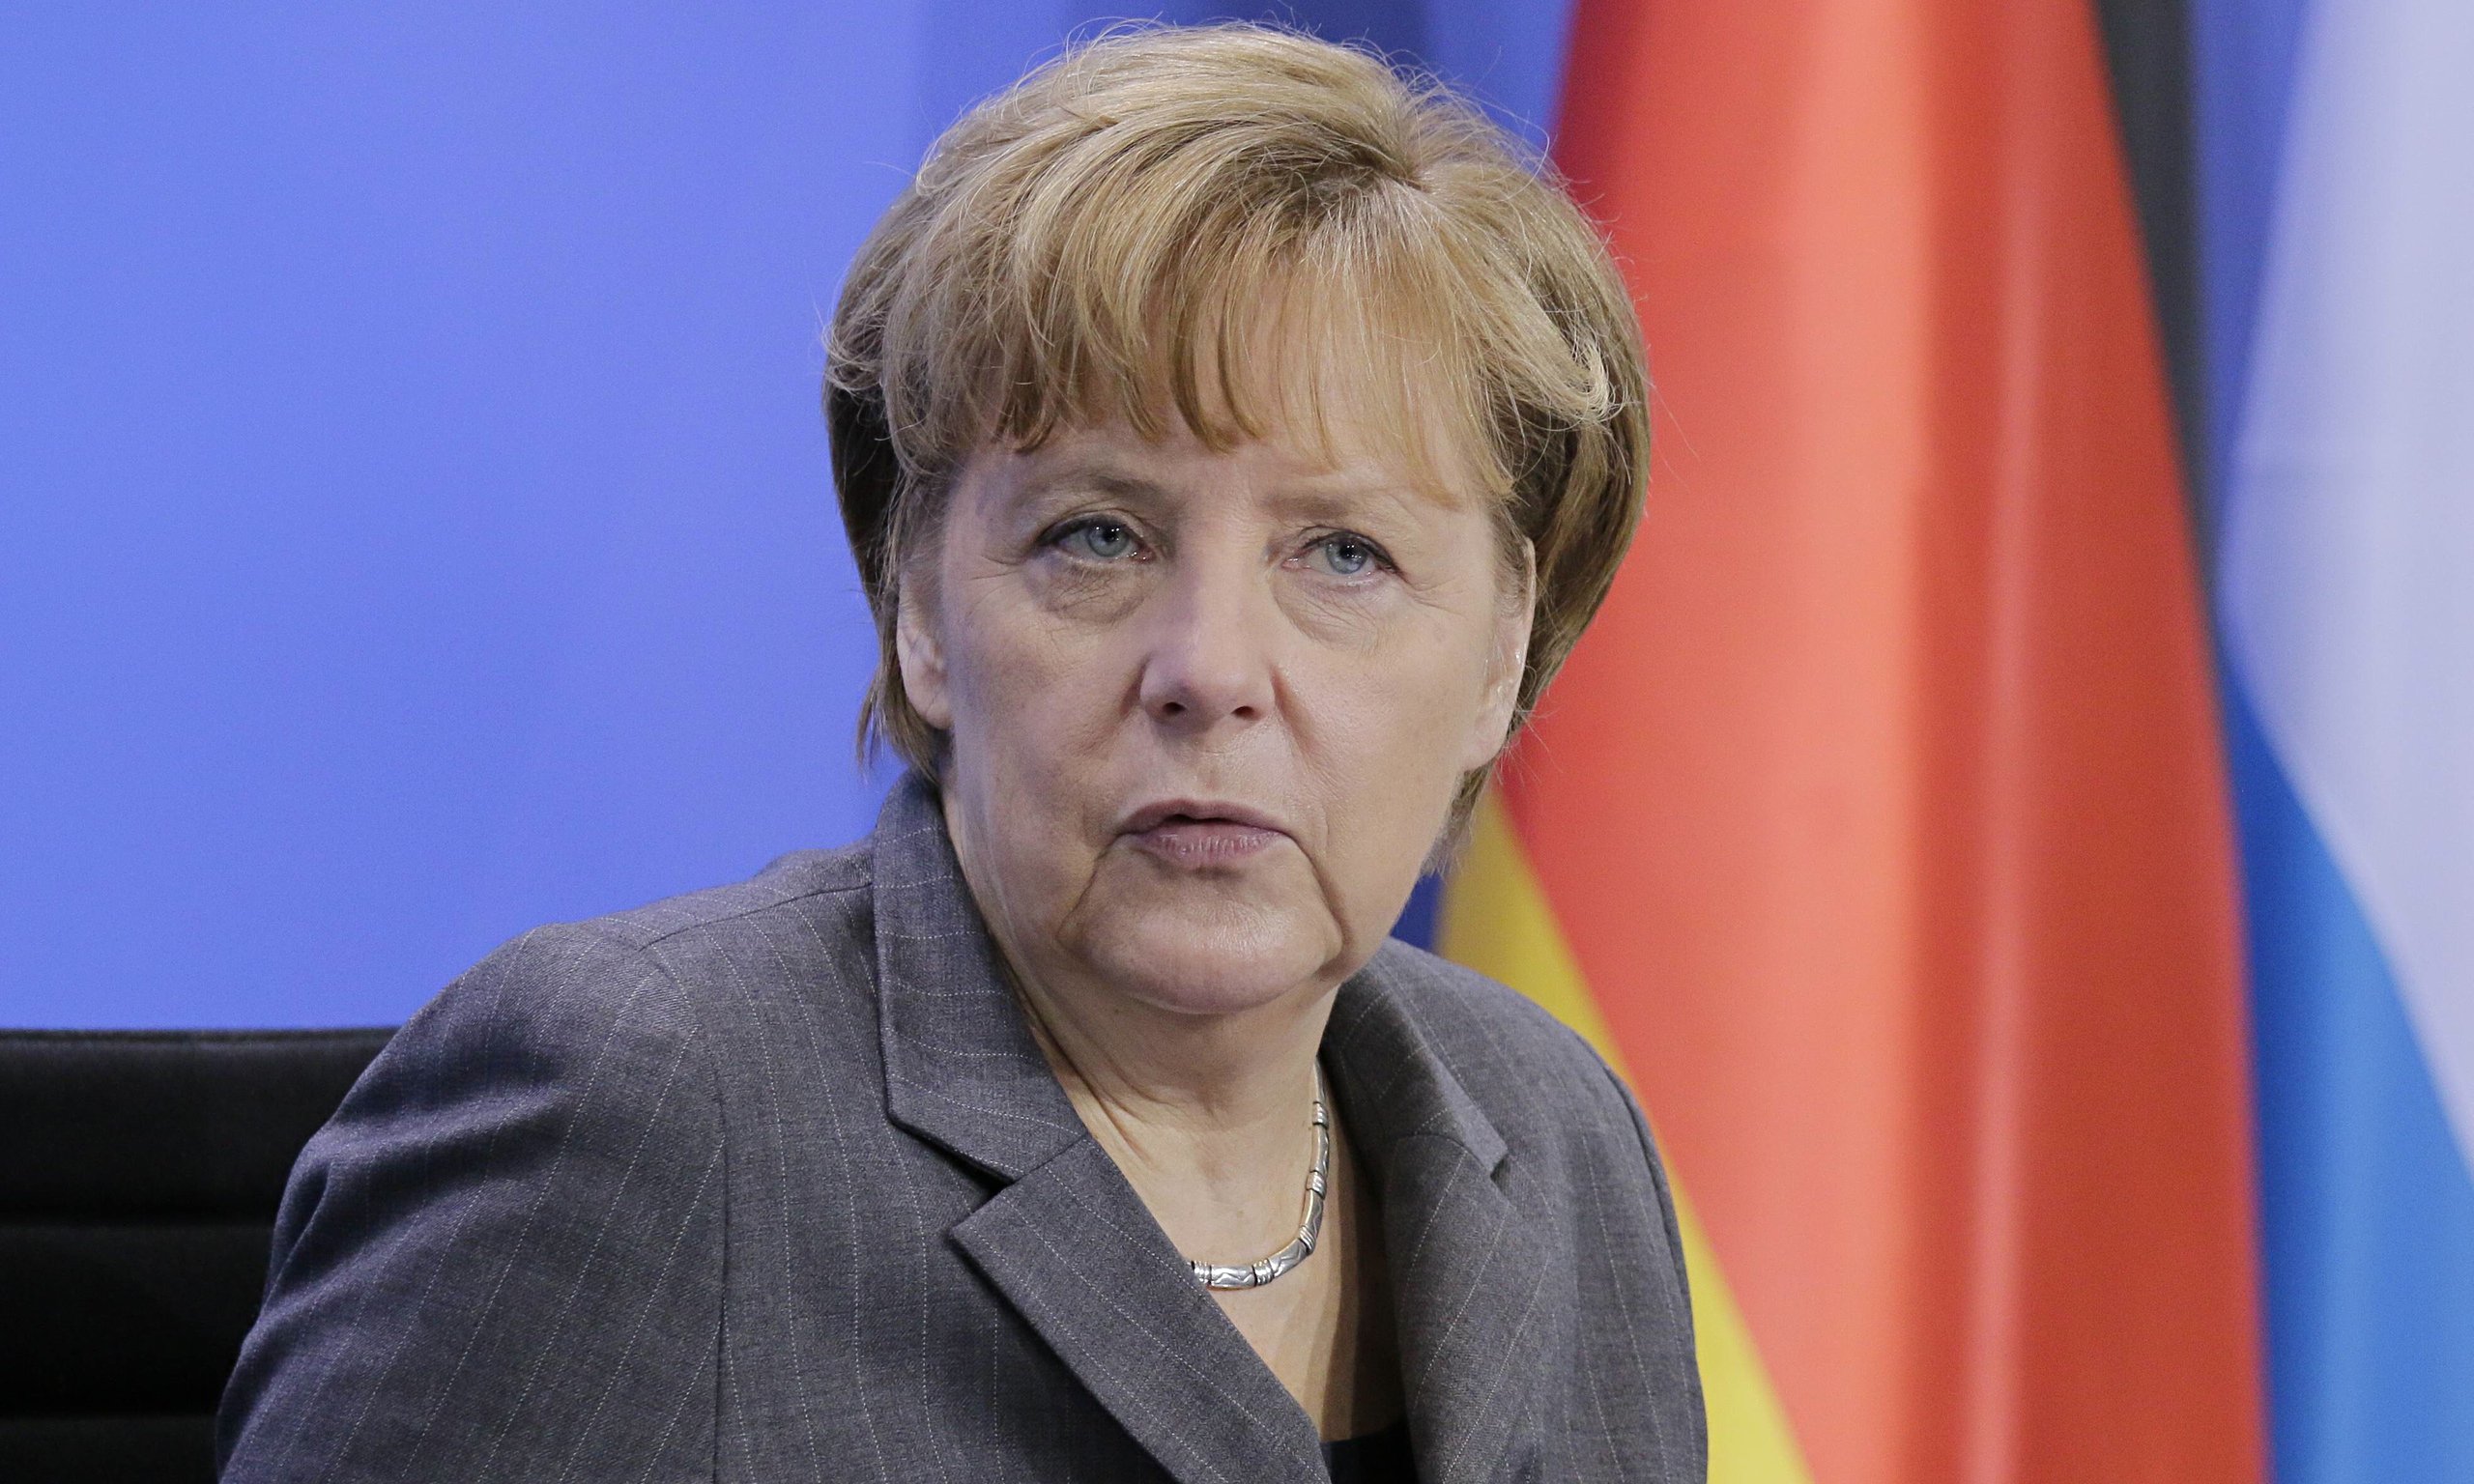 Merkel to address German parliament on EU budget, future finances